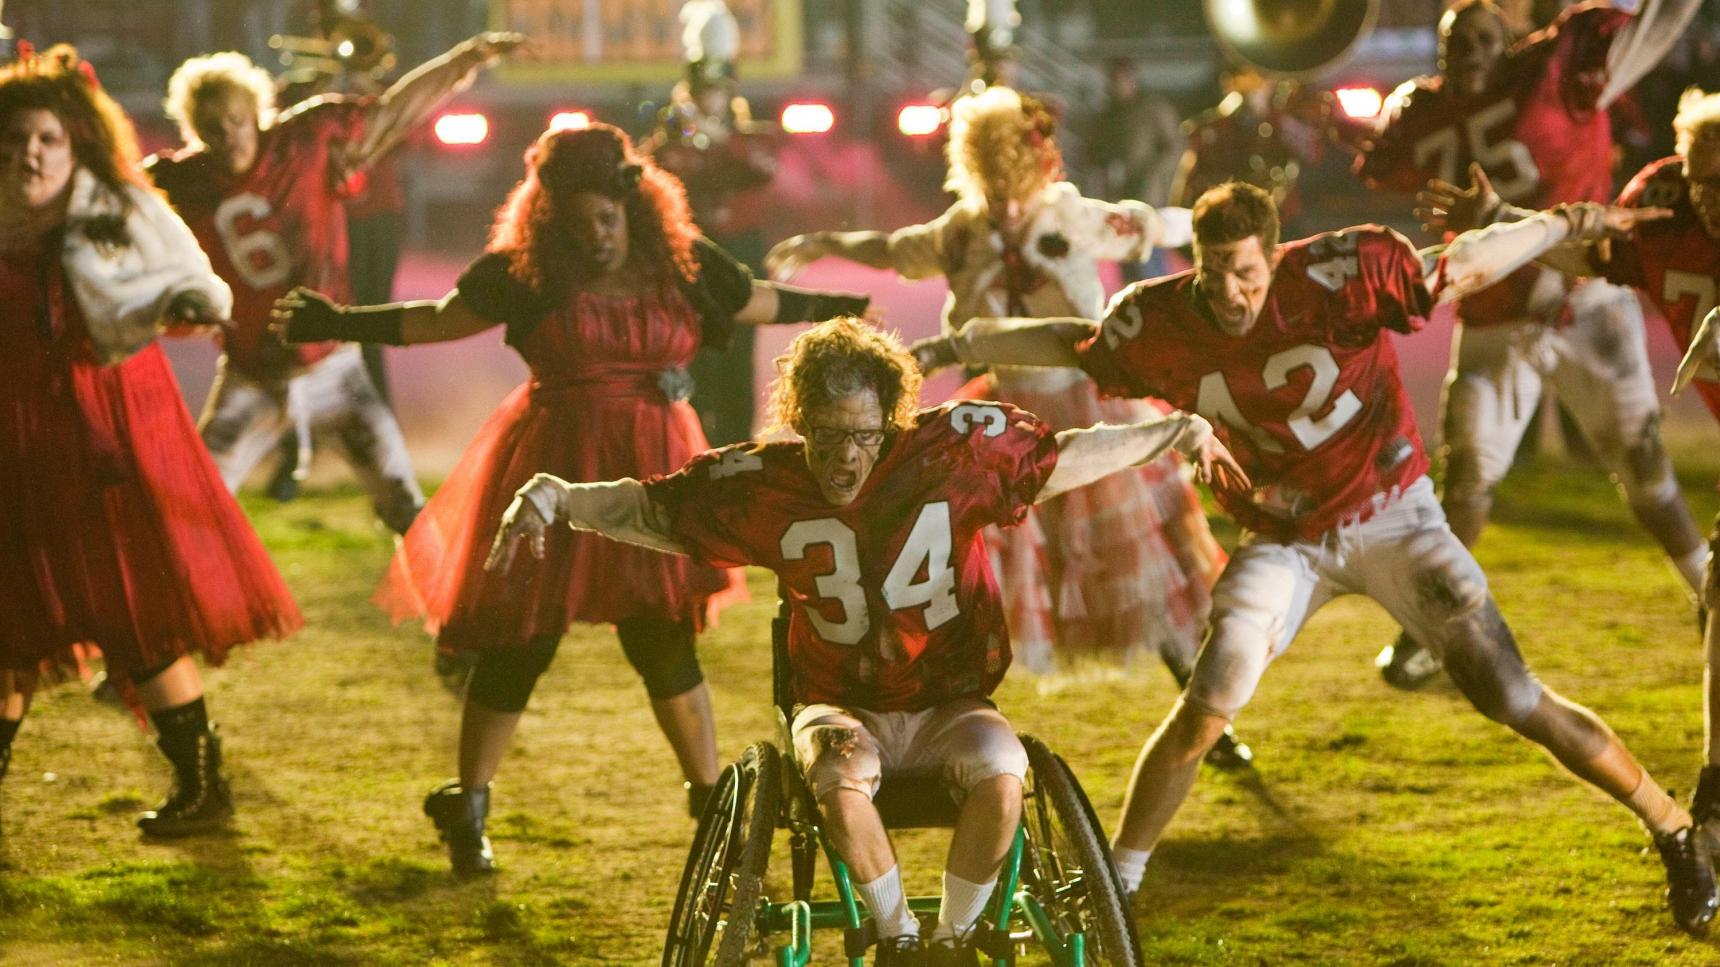 Poster del episodio 11 de Glee online